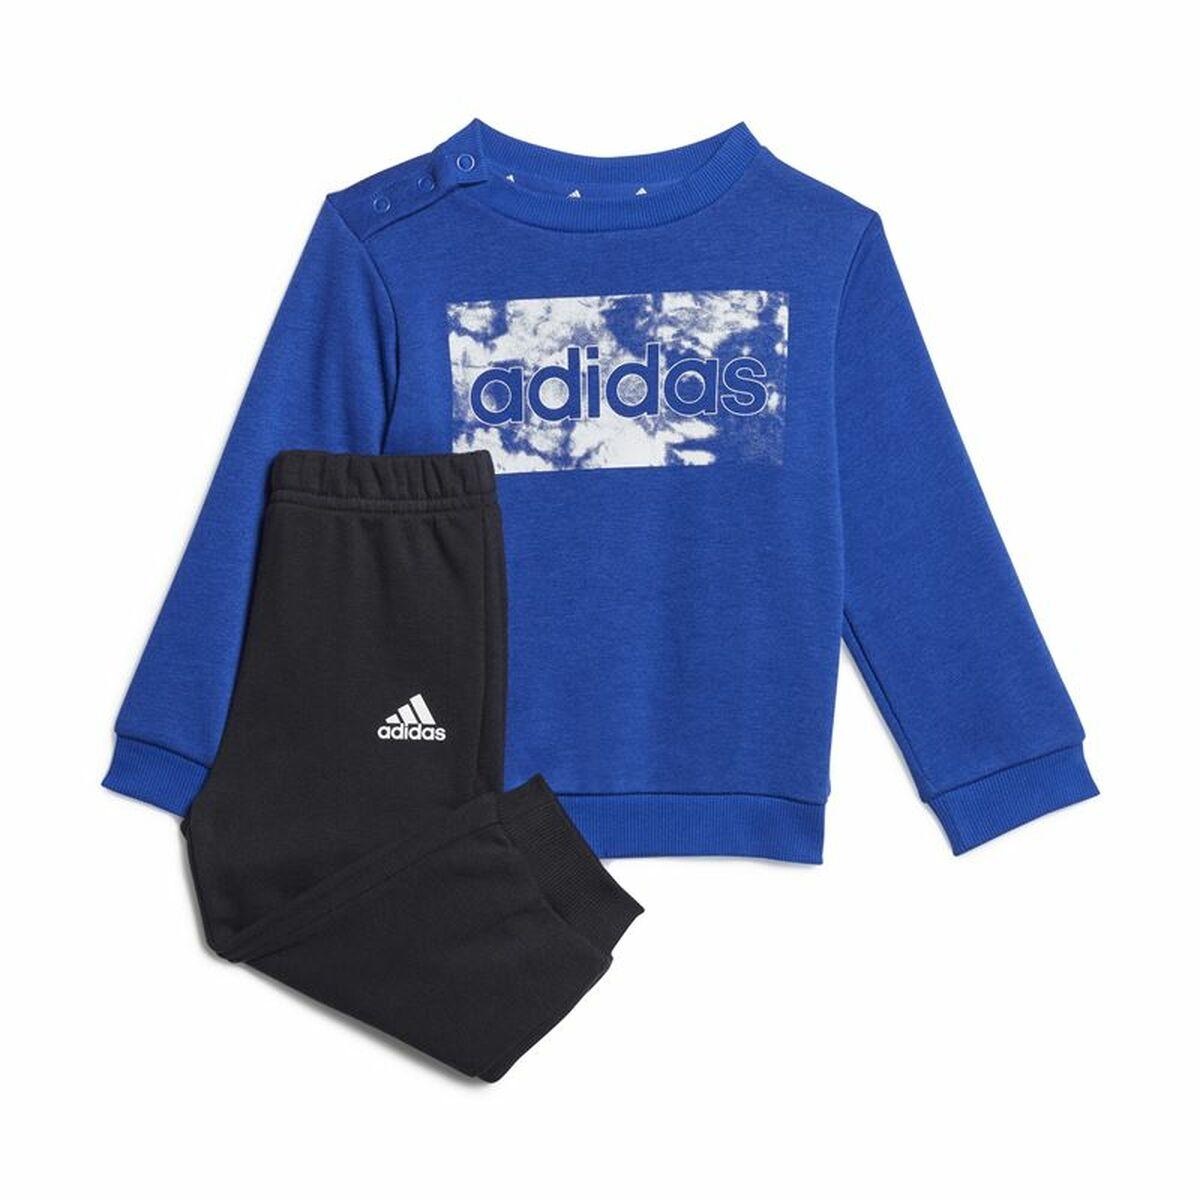 Sportstøj til Baby Adidas Blå 1-2 år